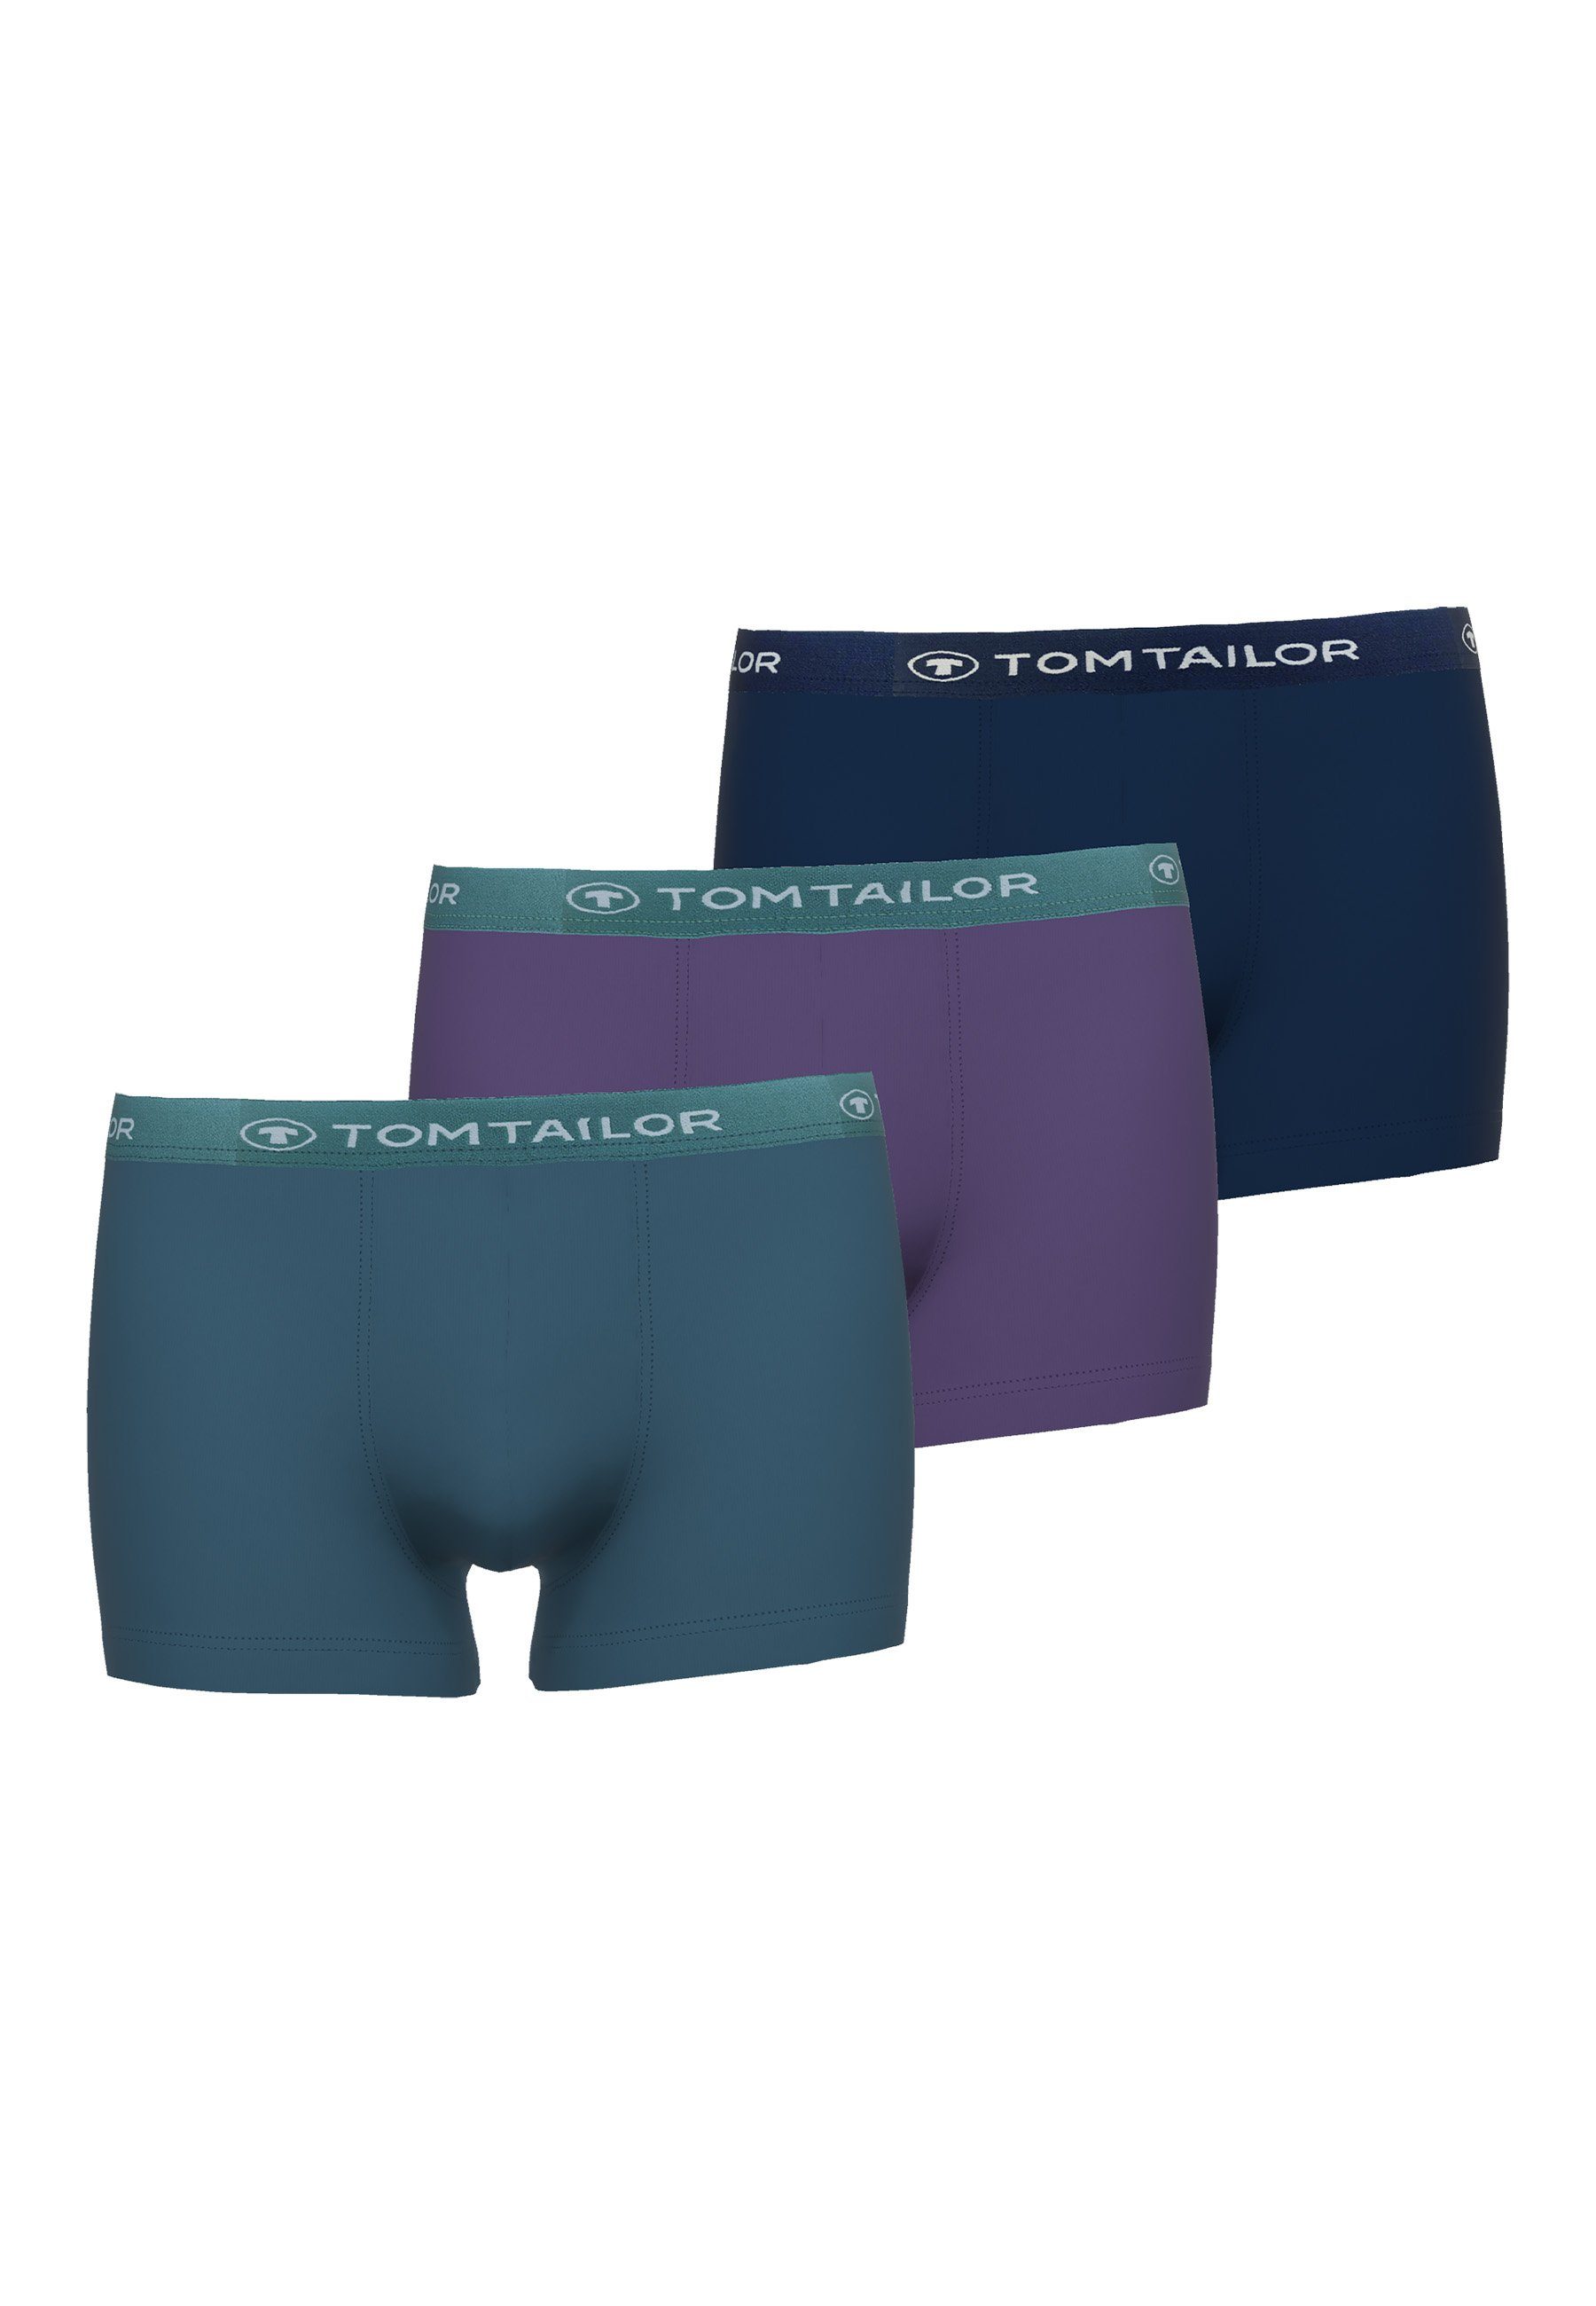 TOM TAILOR Boxershorts lila-dunkel-multicolor1 (3-St) Herren uni Pants 3er Pack TAILOR lila TOM